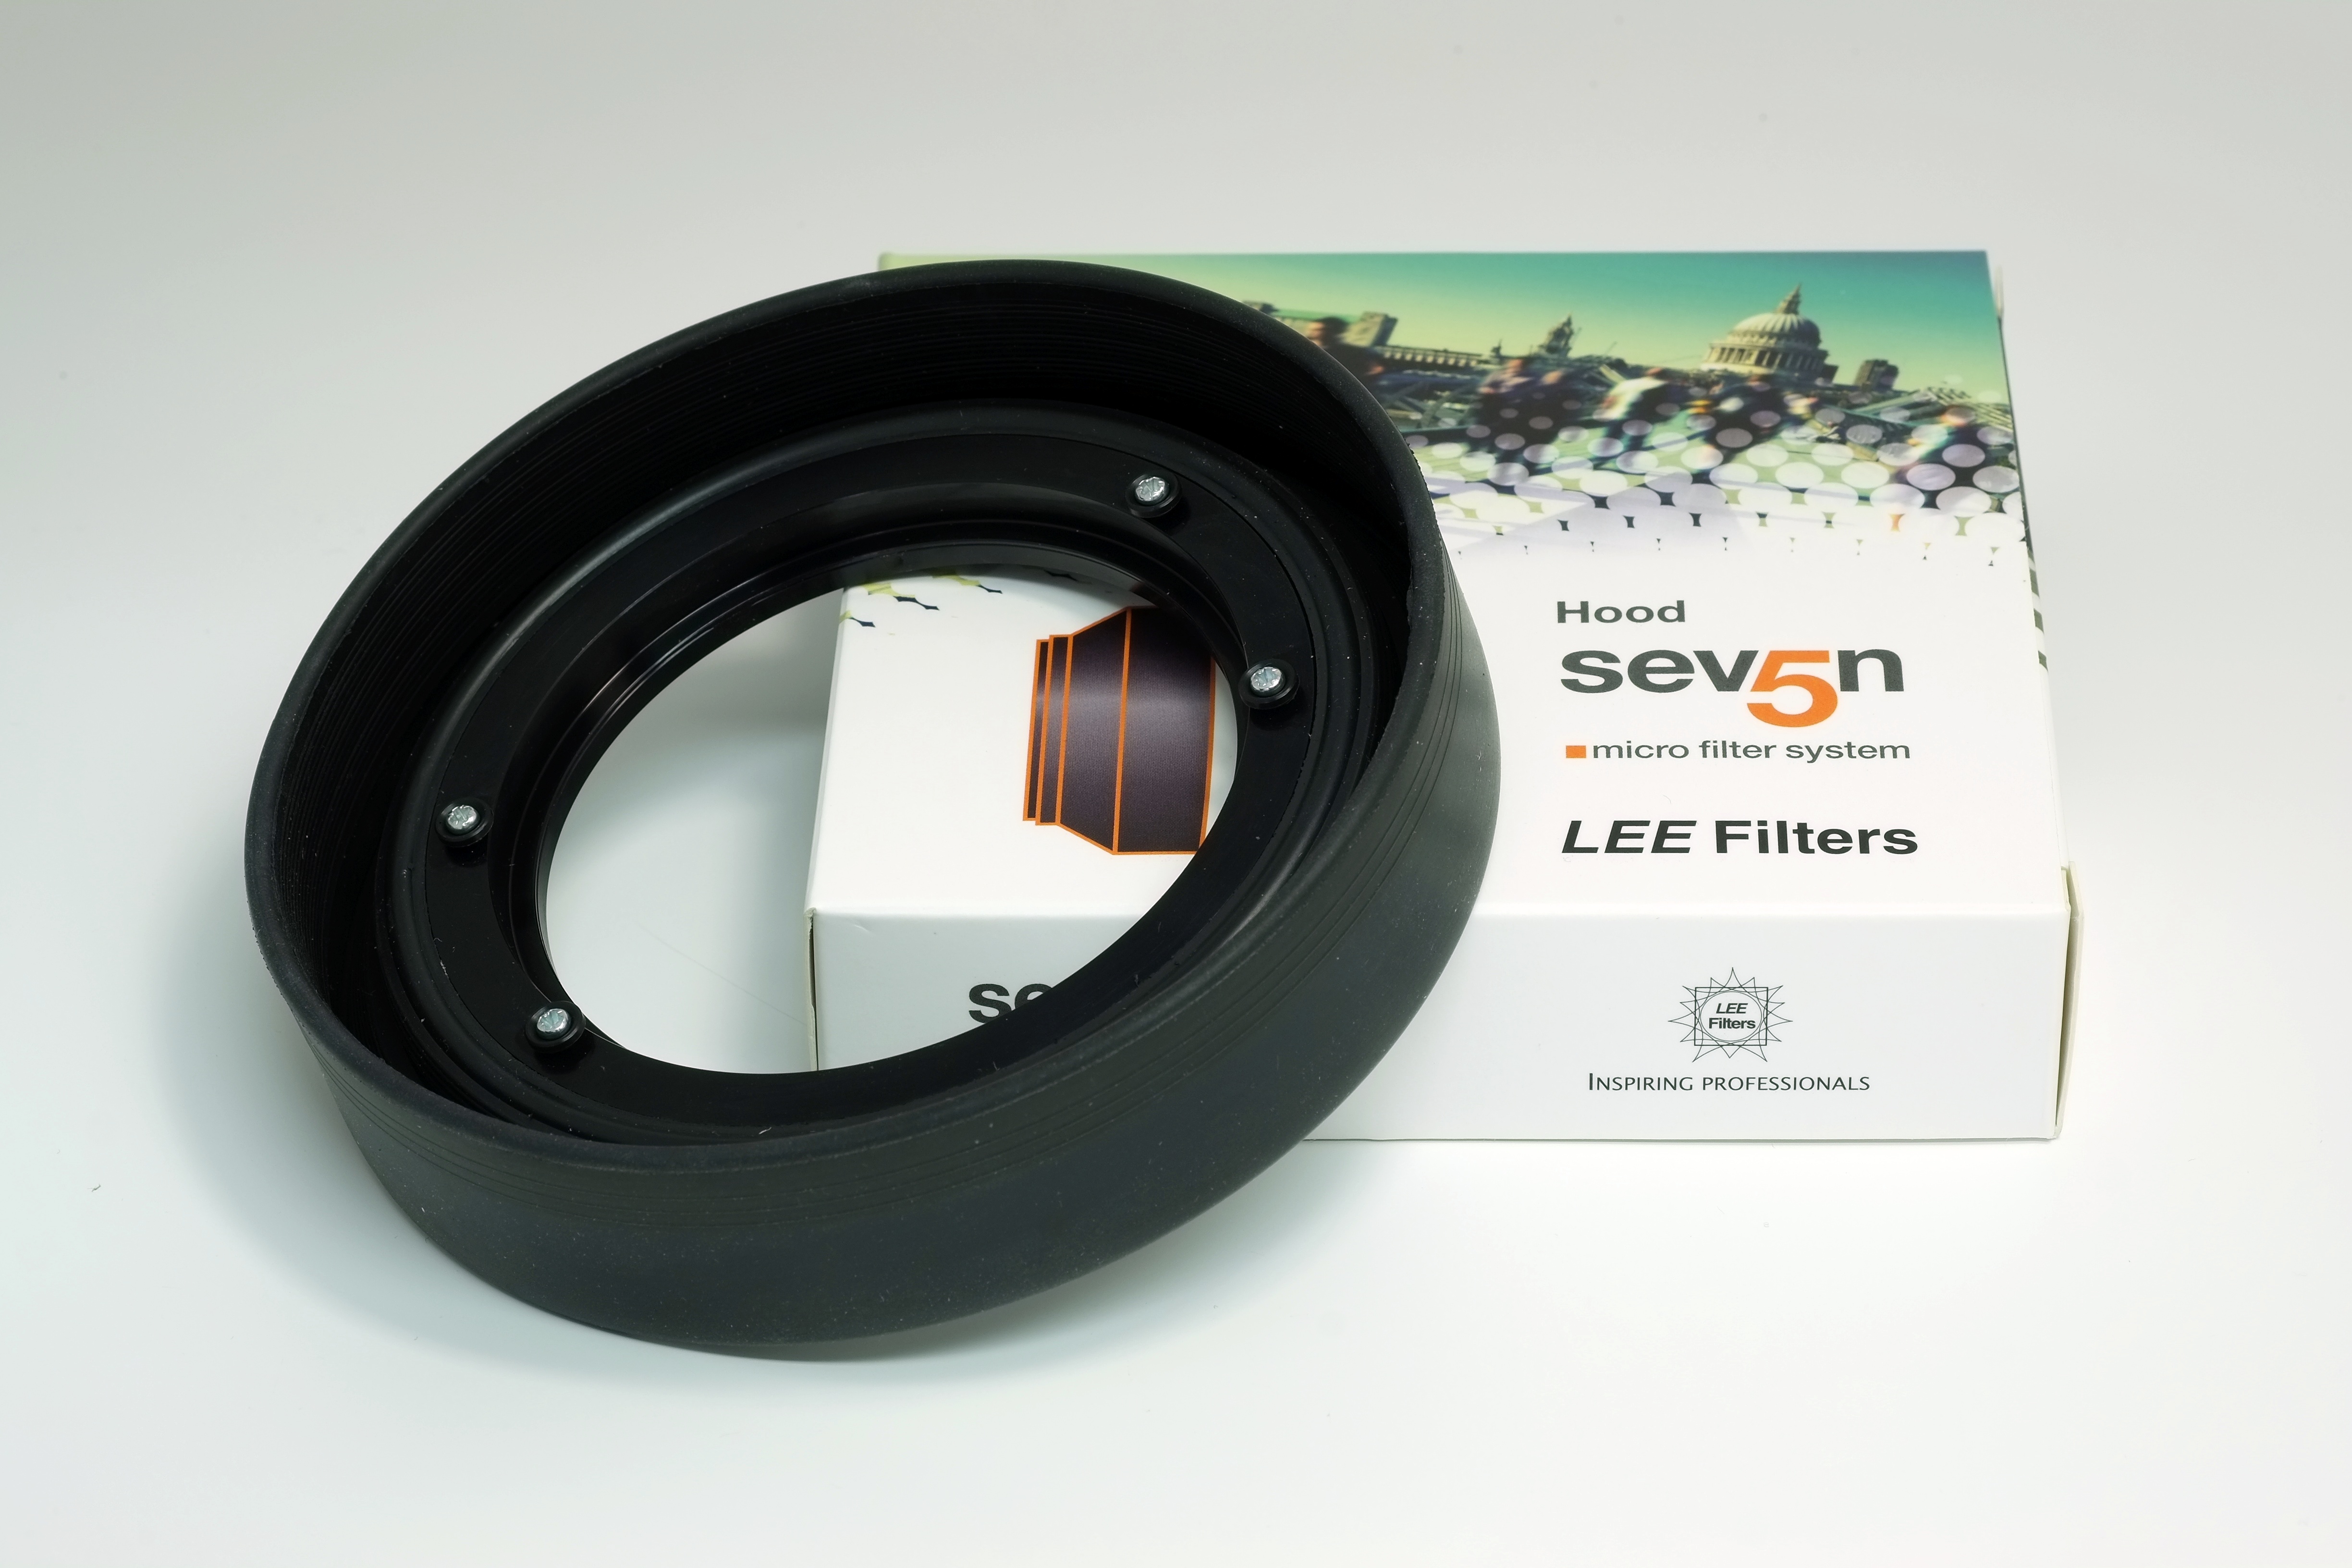 LEE Filters Seven 5 Lens hood